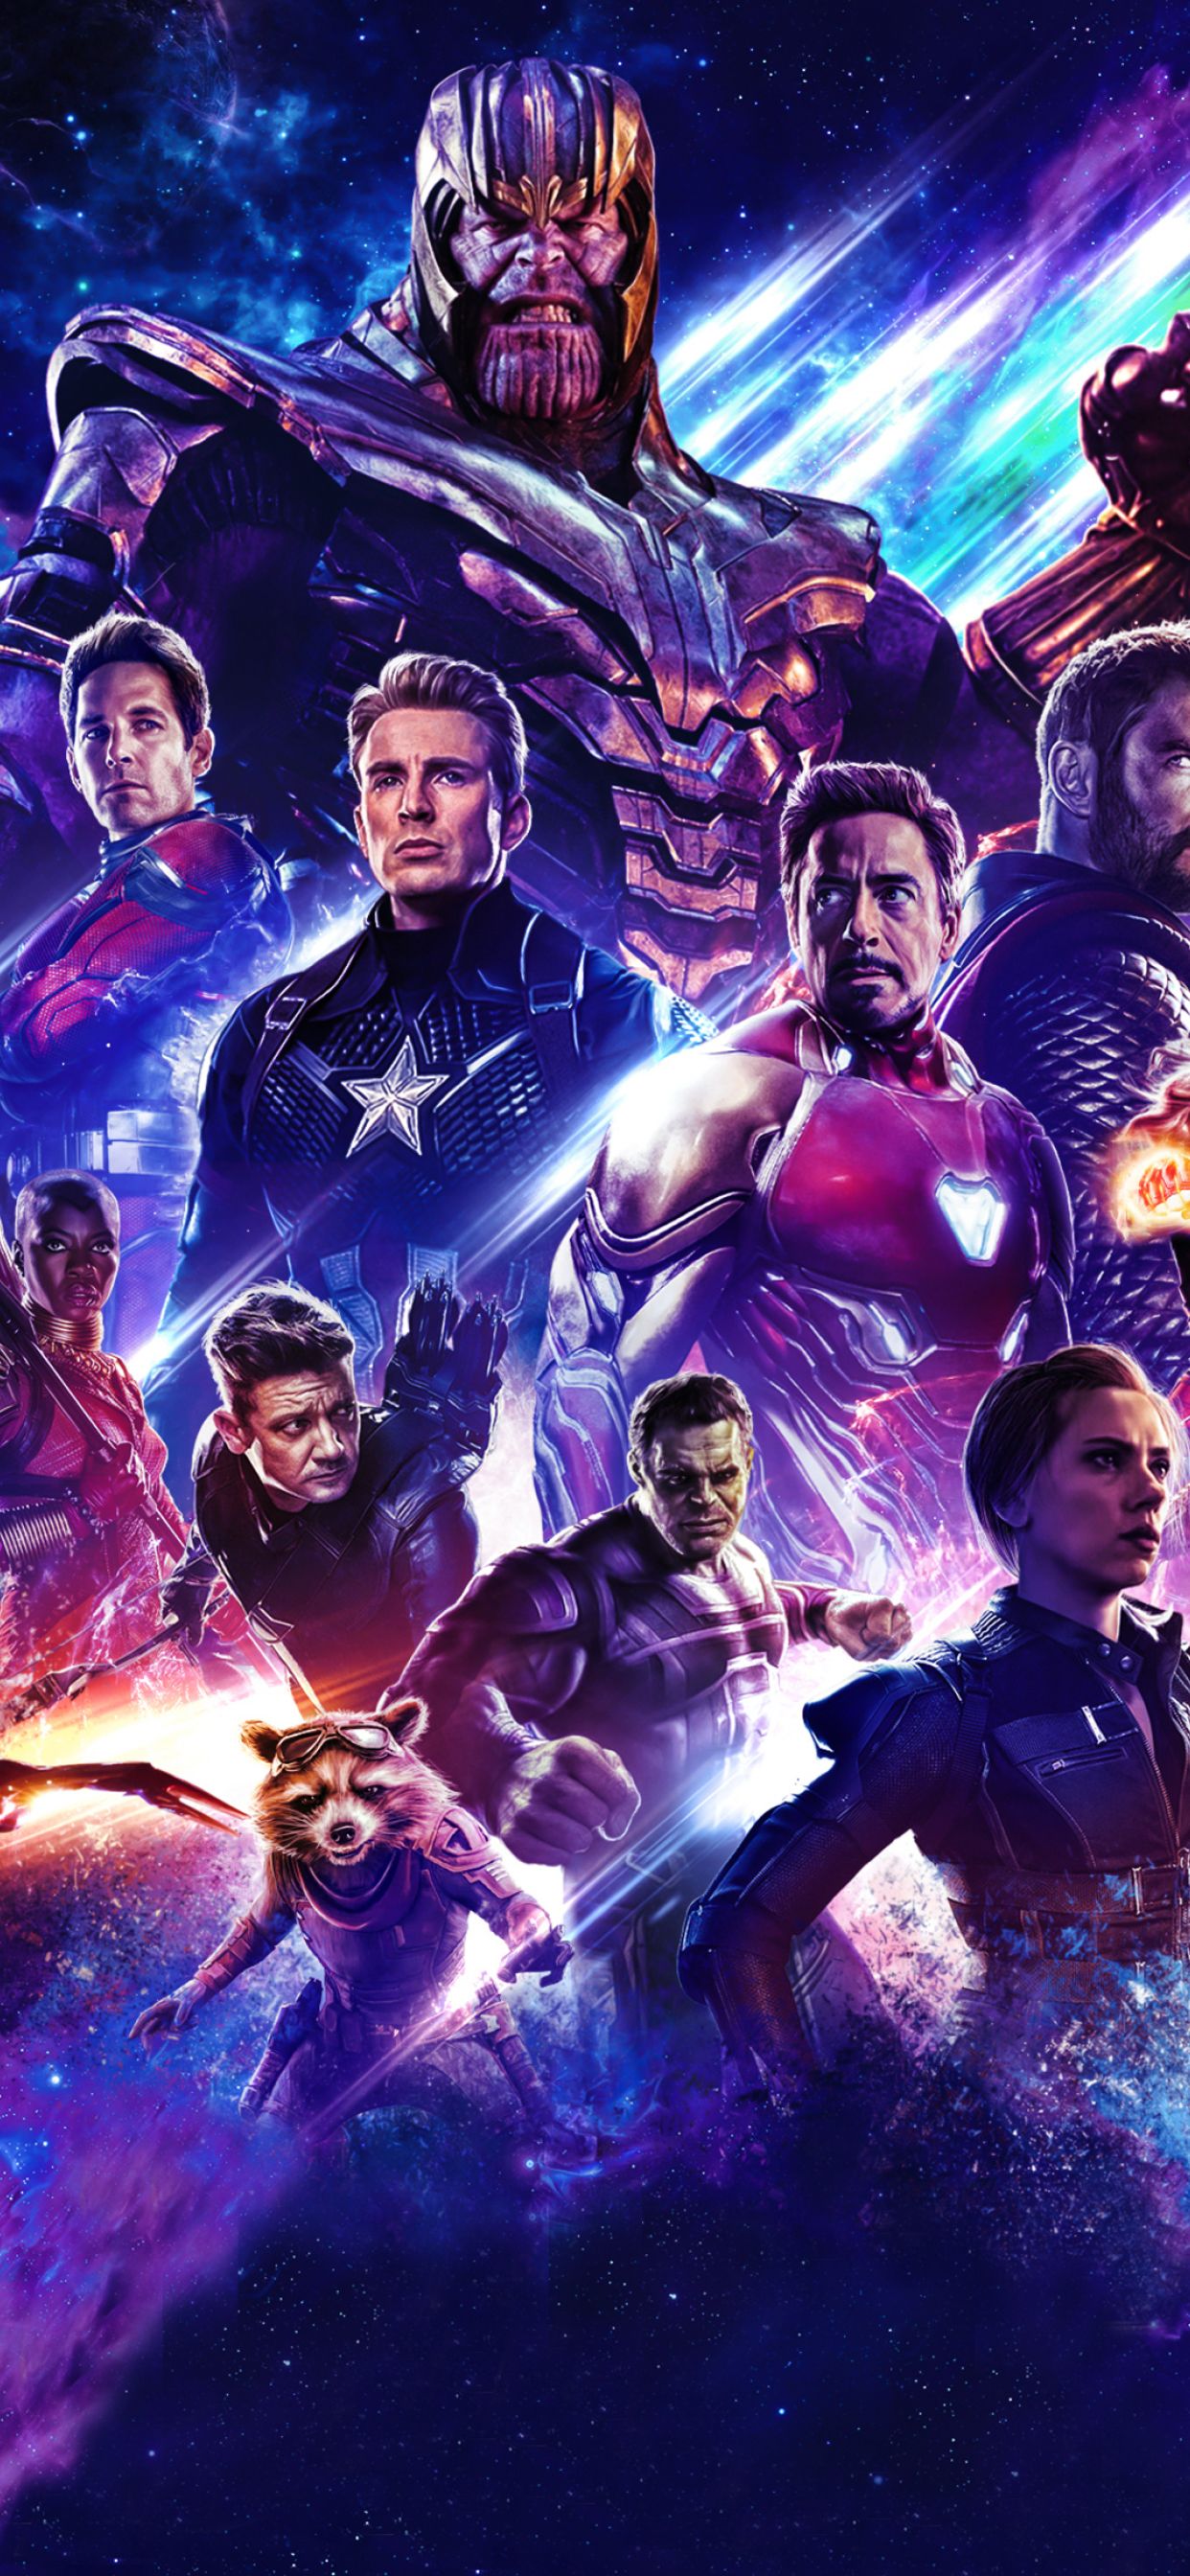 Avengers Endgame 2019 Movie iPhone XS MAX Wallpaper, HD